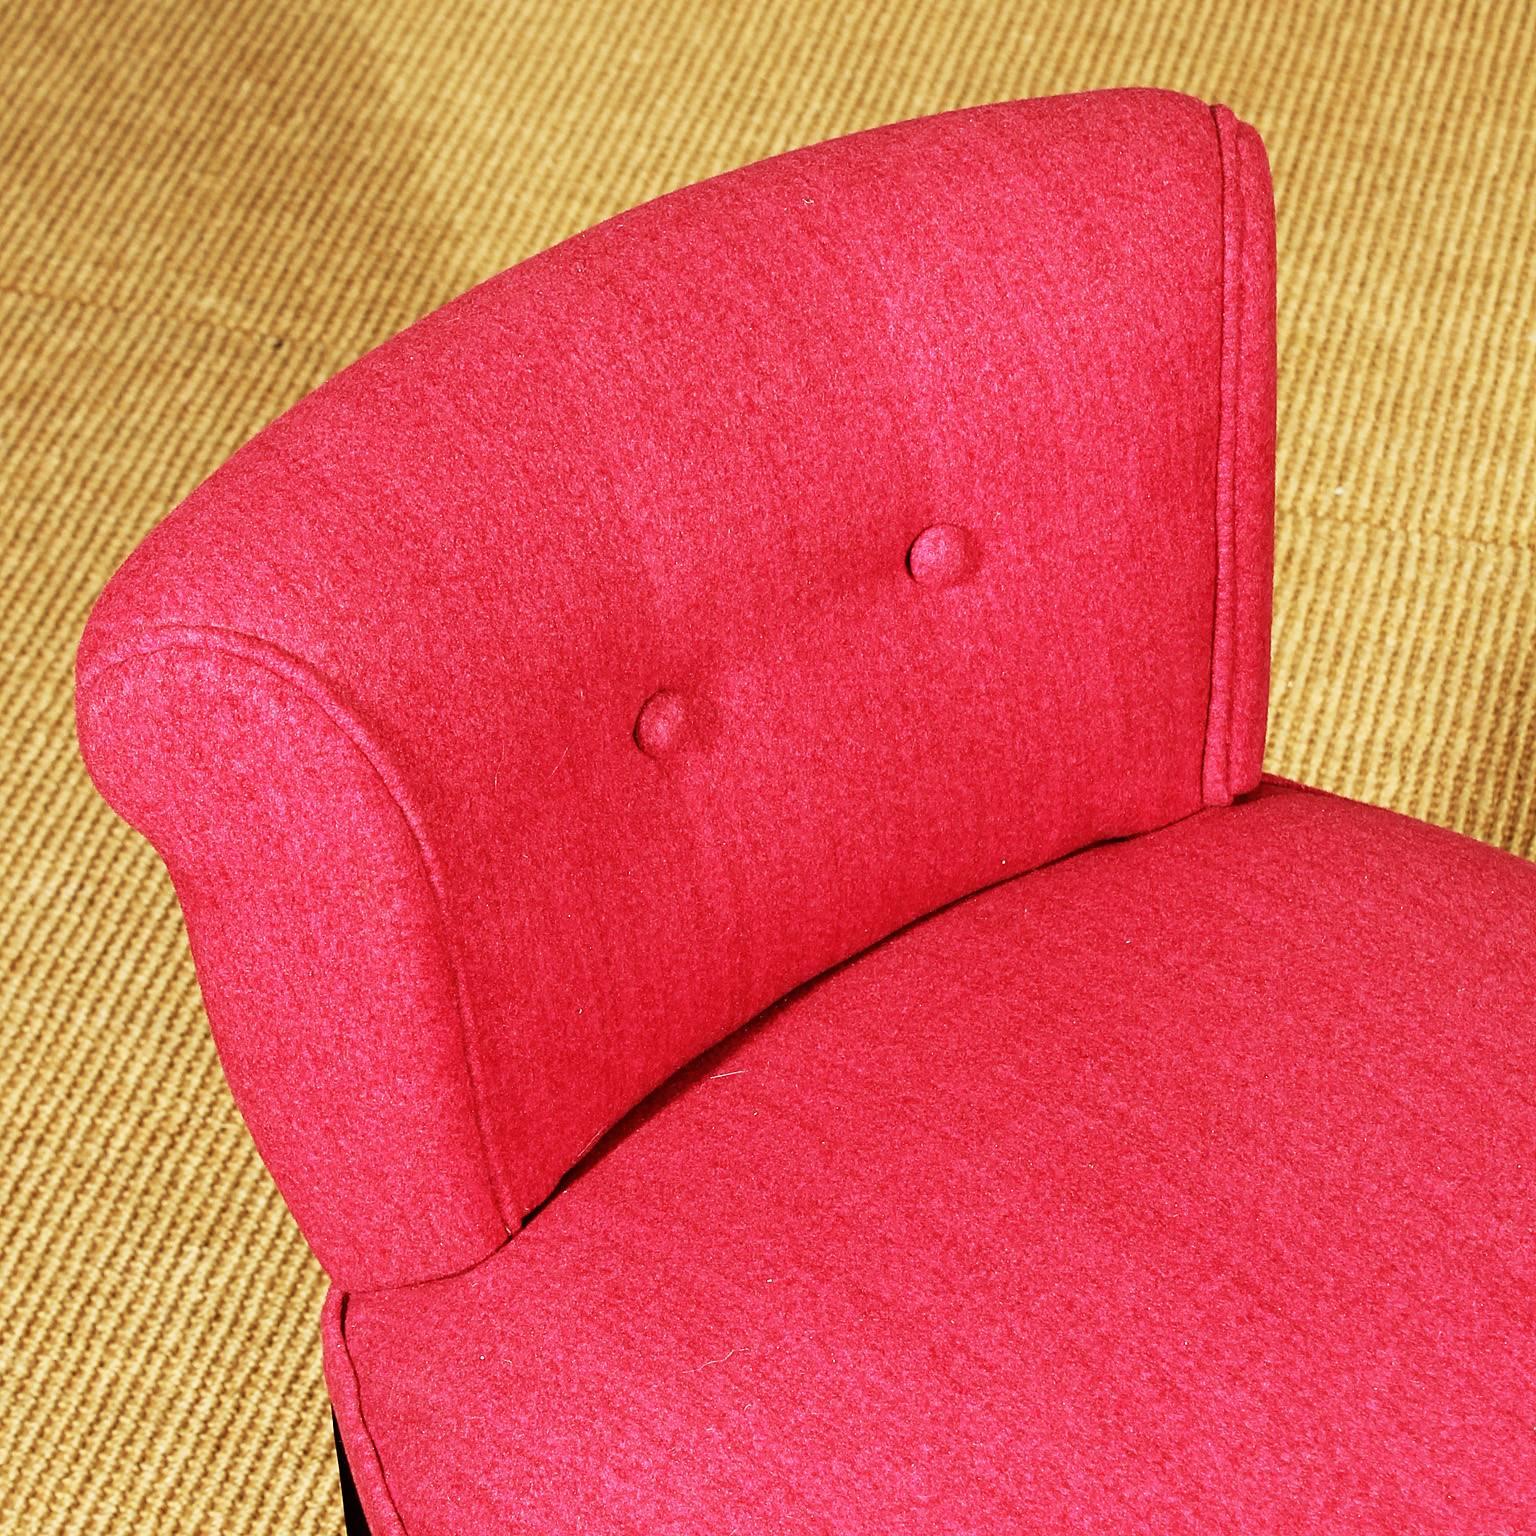 Felt 1940s Low chair, beech, felt upholstery - France